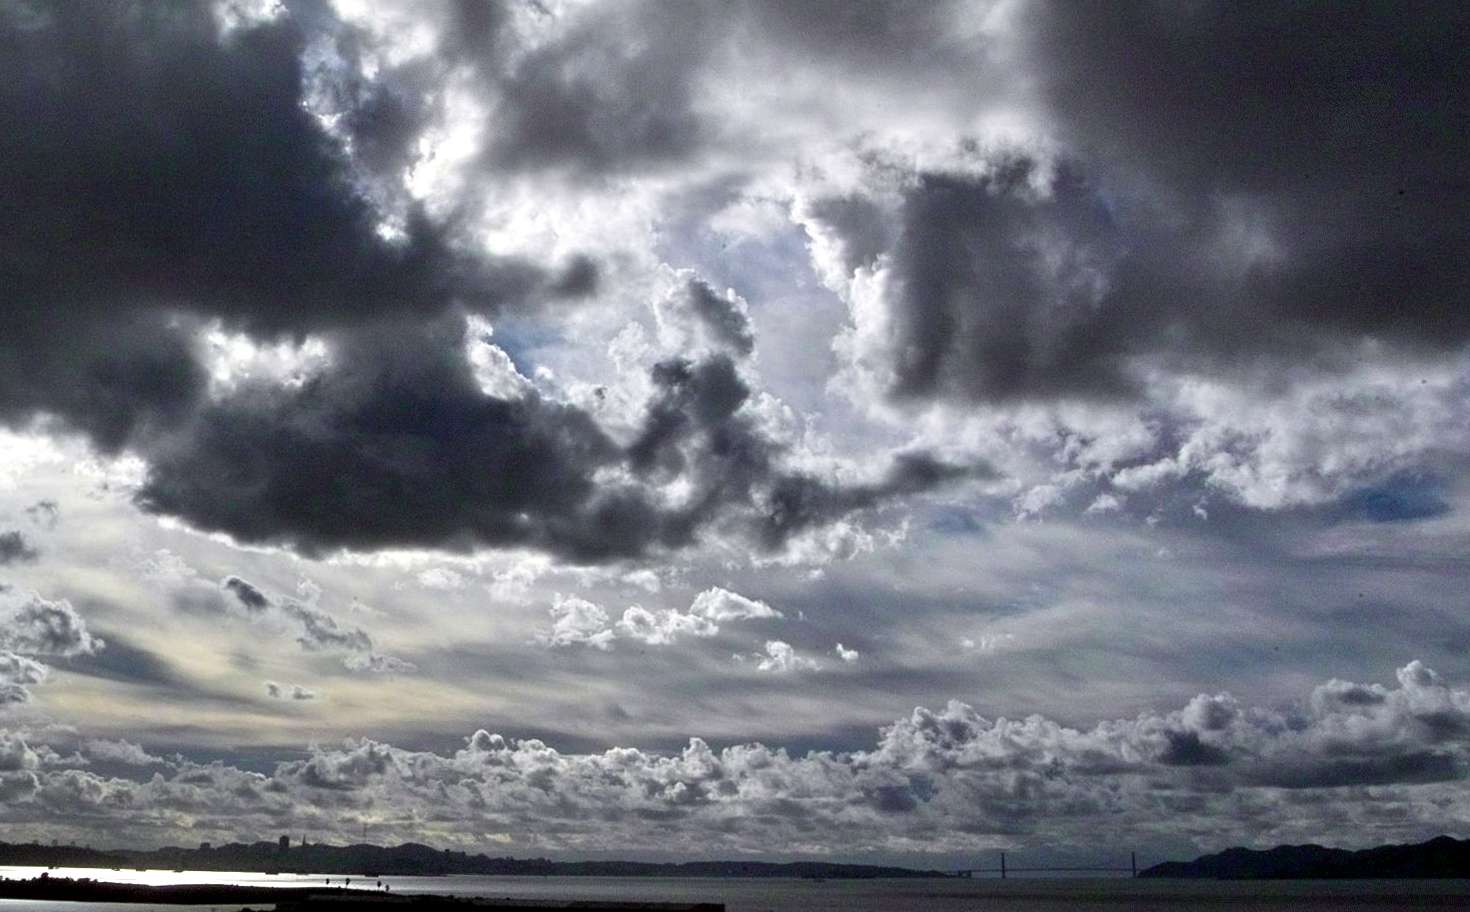 Meteo Ragusa: oggi venerdì 29 Dicembre prevalentemente nuvoloso per velature.